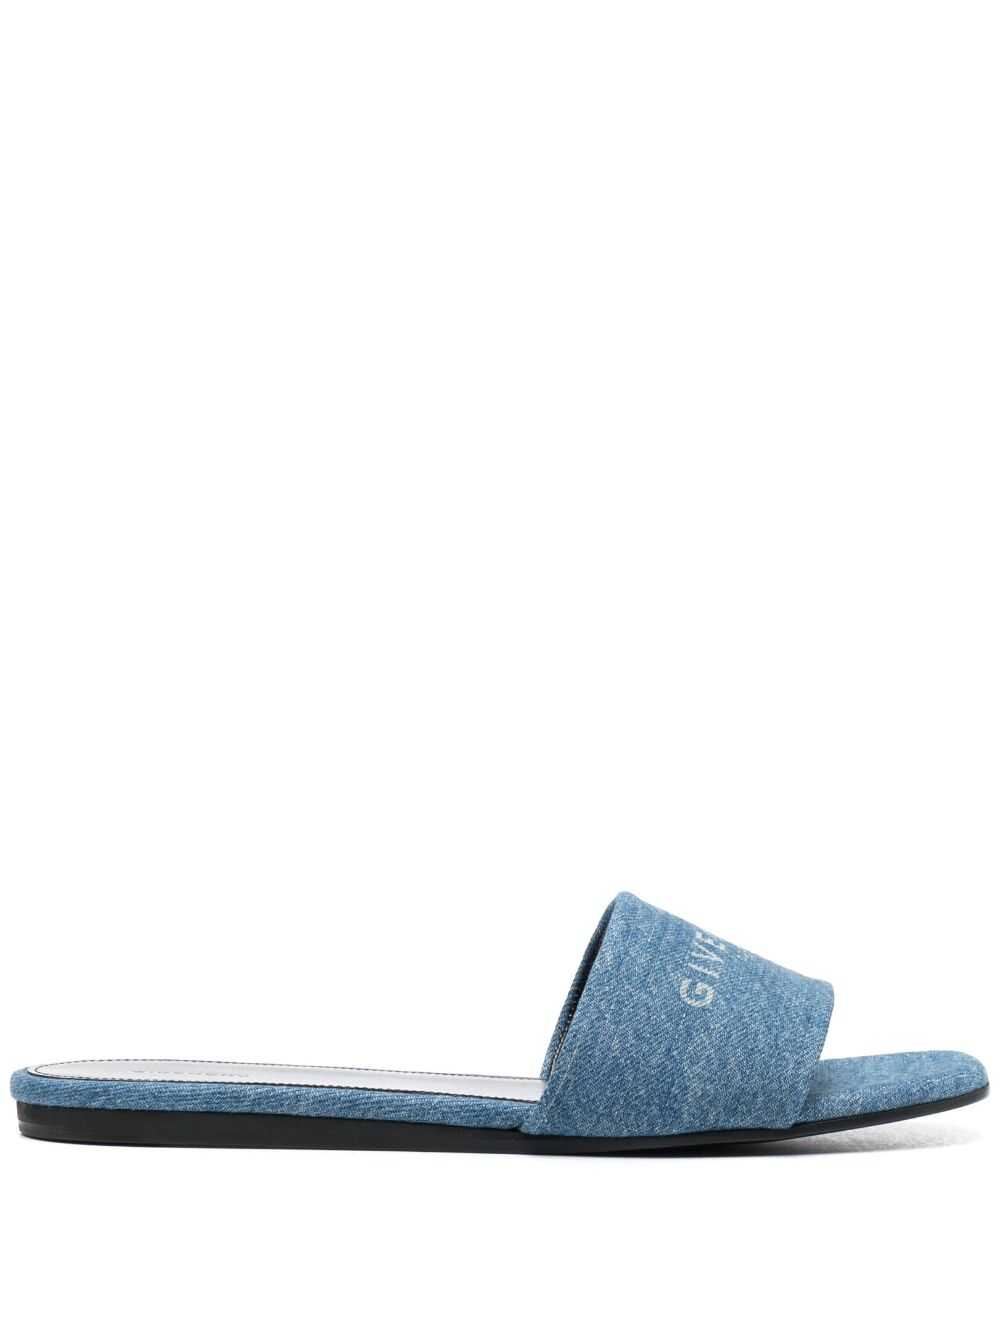 Givenchy Sandals Blue Blue image15